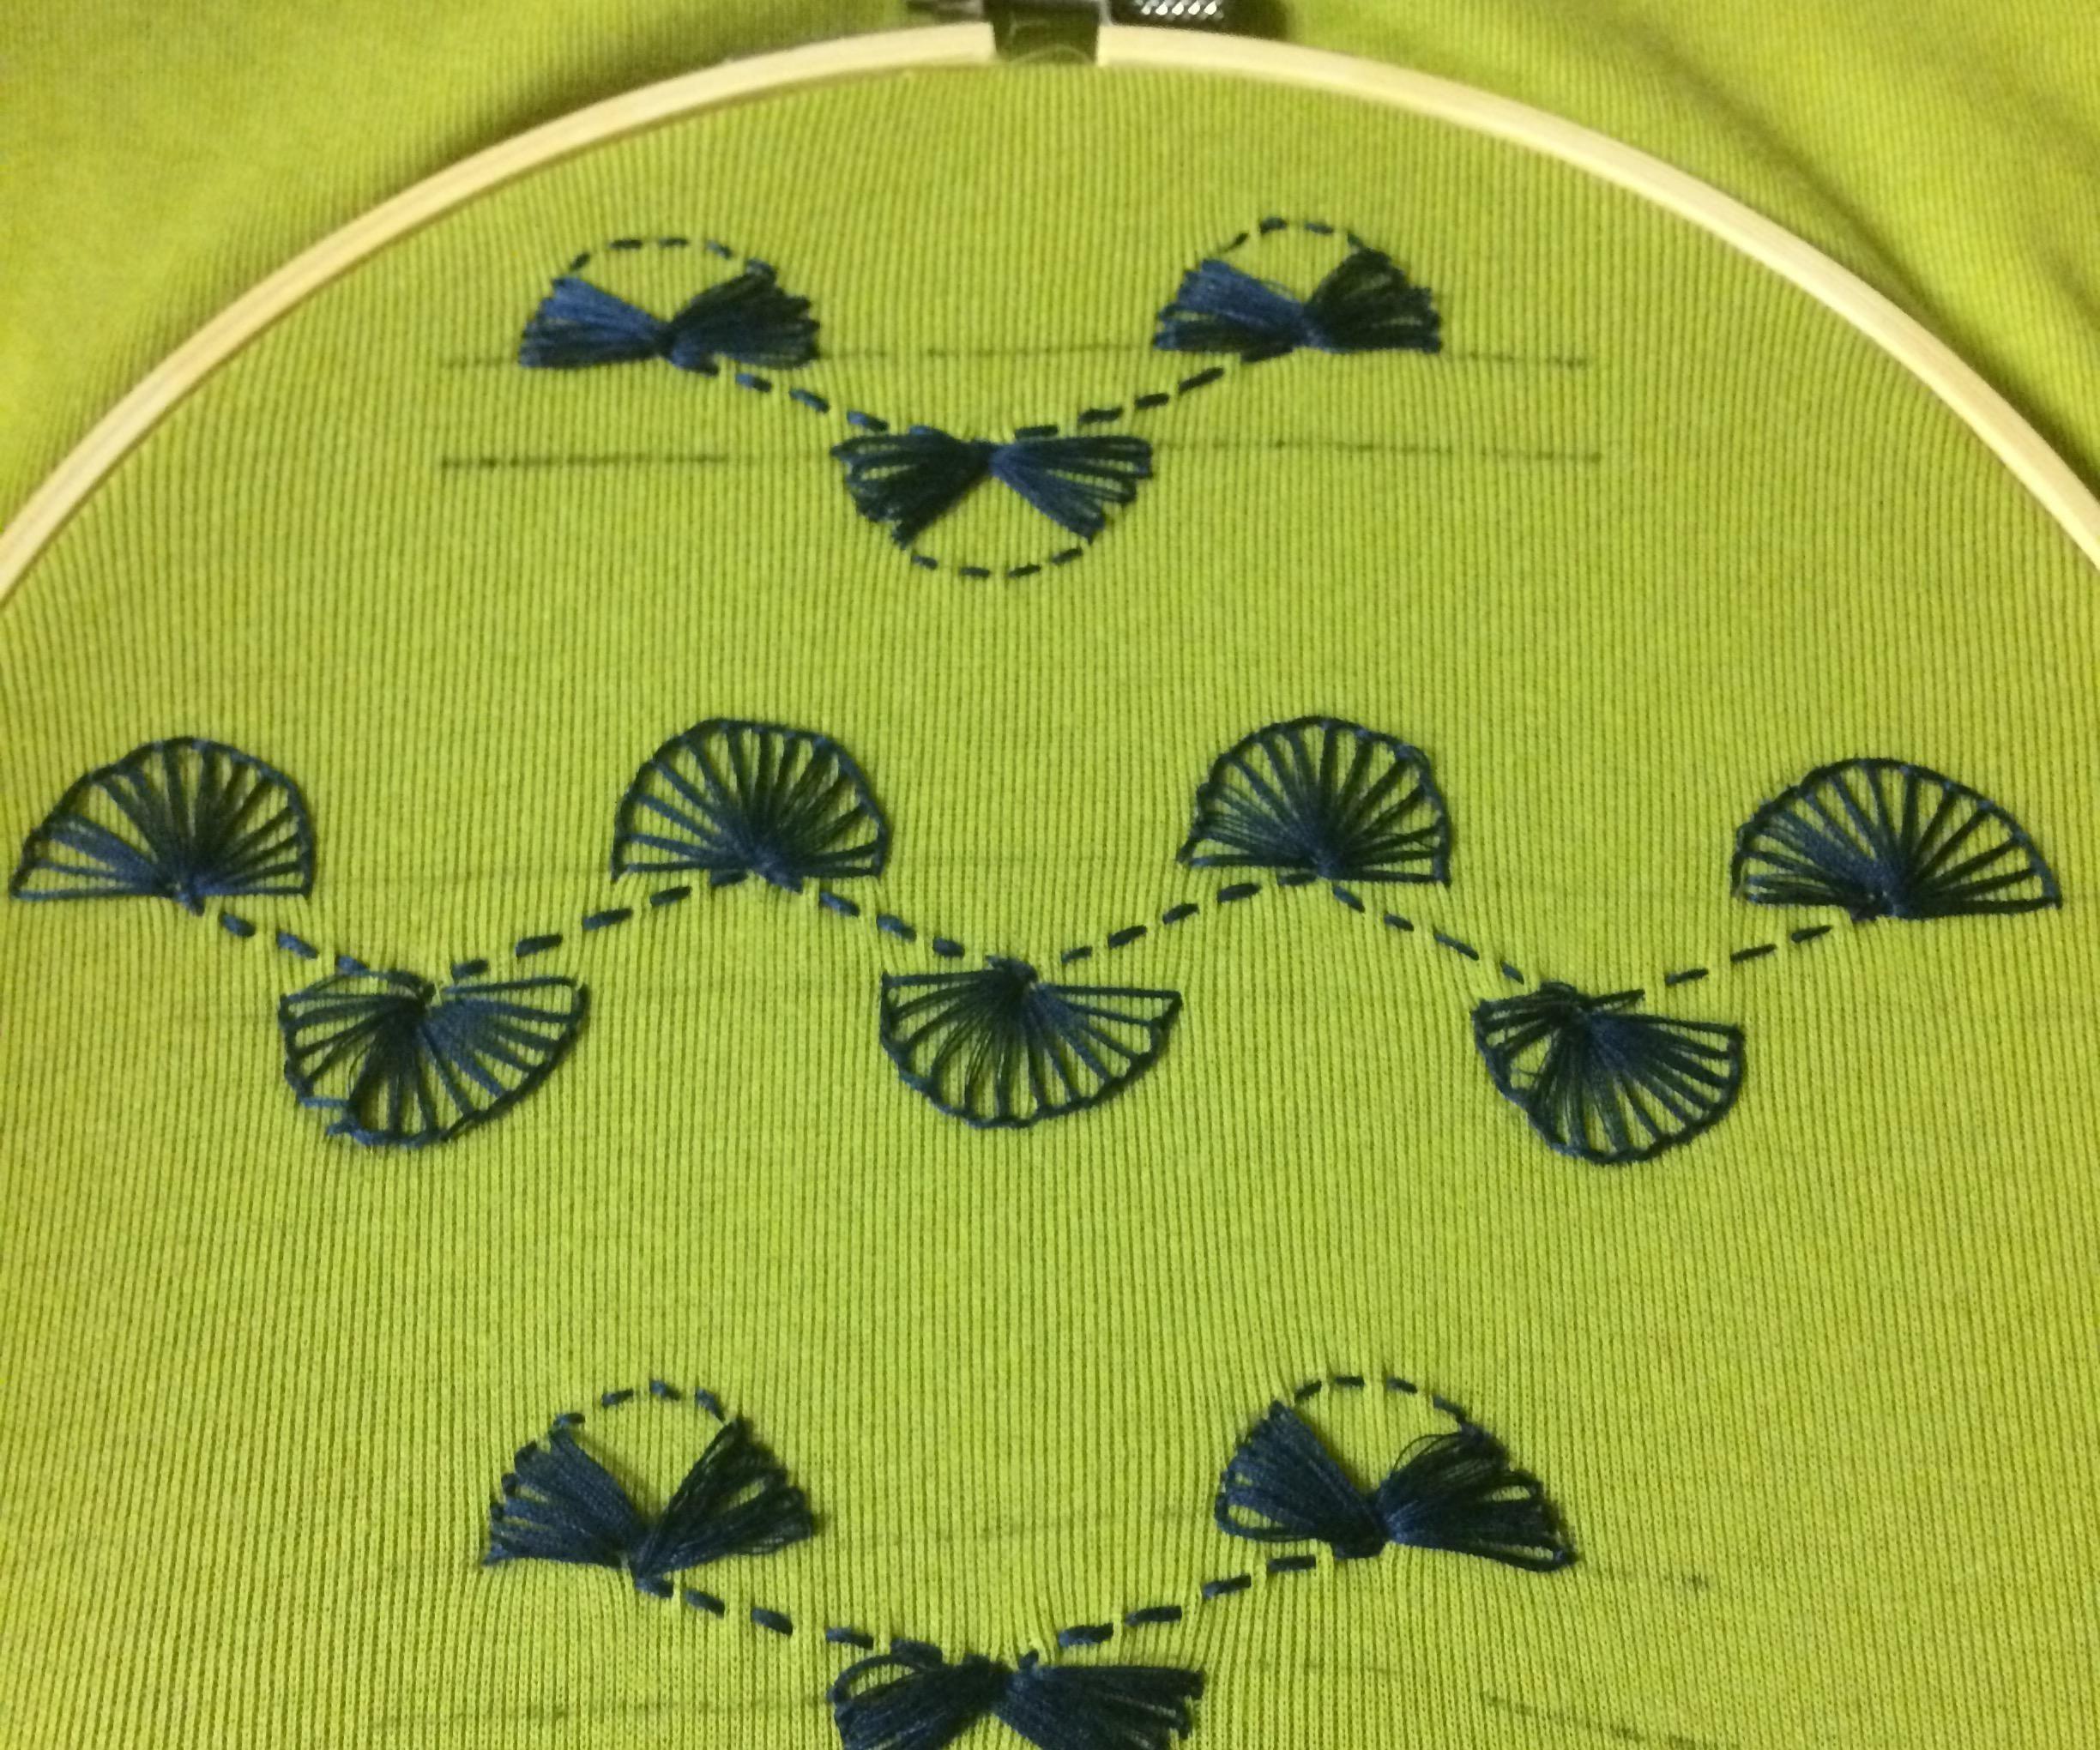 Indigo Handmade Embroidery on T-shirt